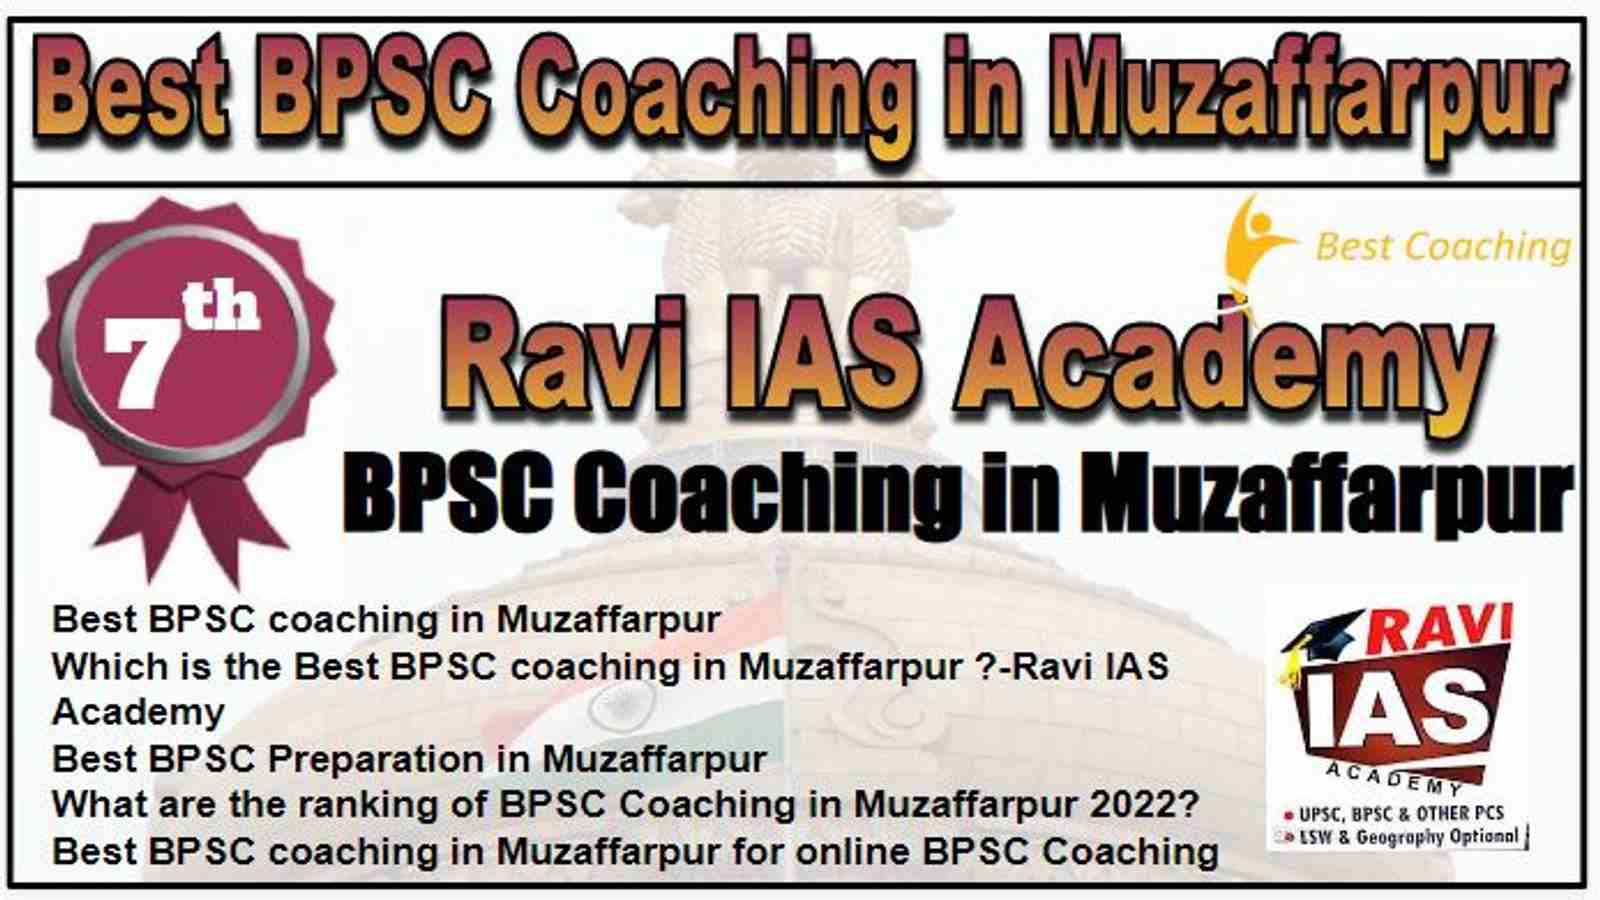 Rank 7 Best BPSC Coaching in Muzaffarpur